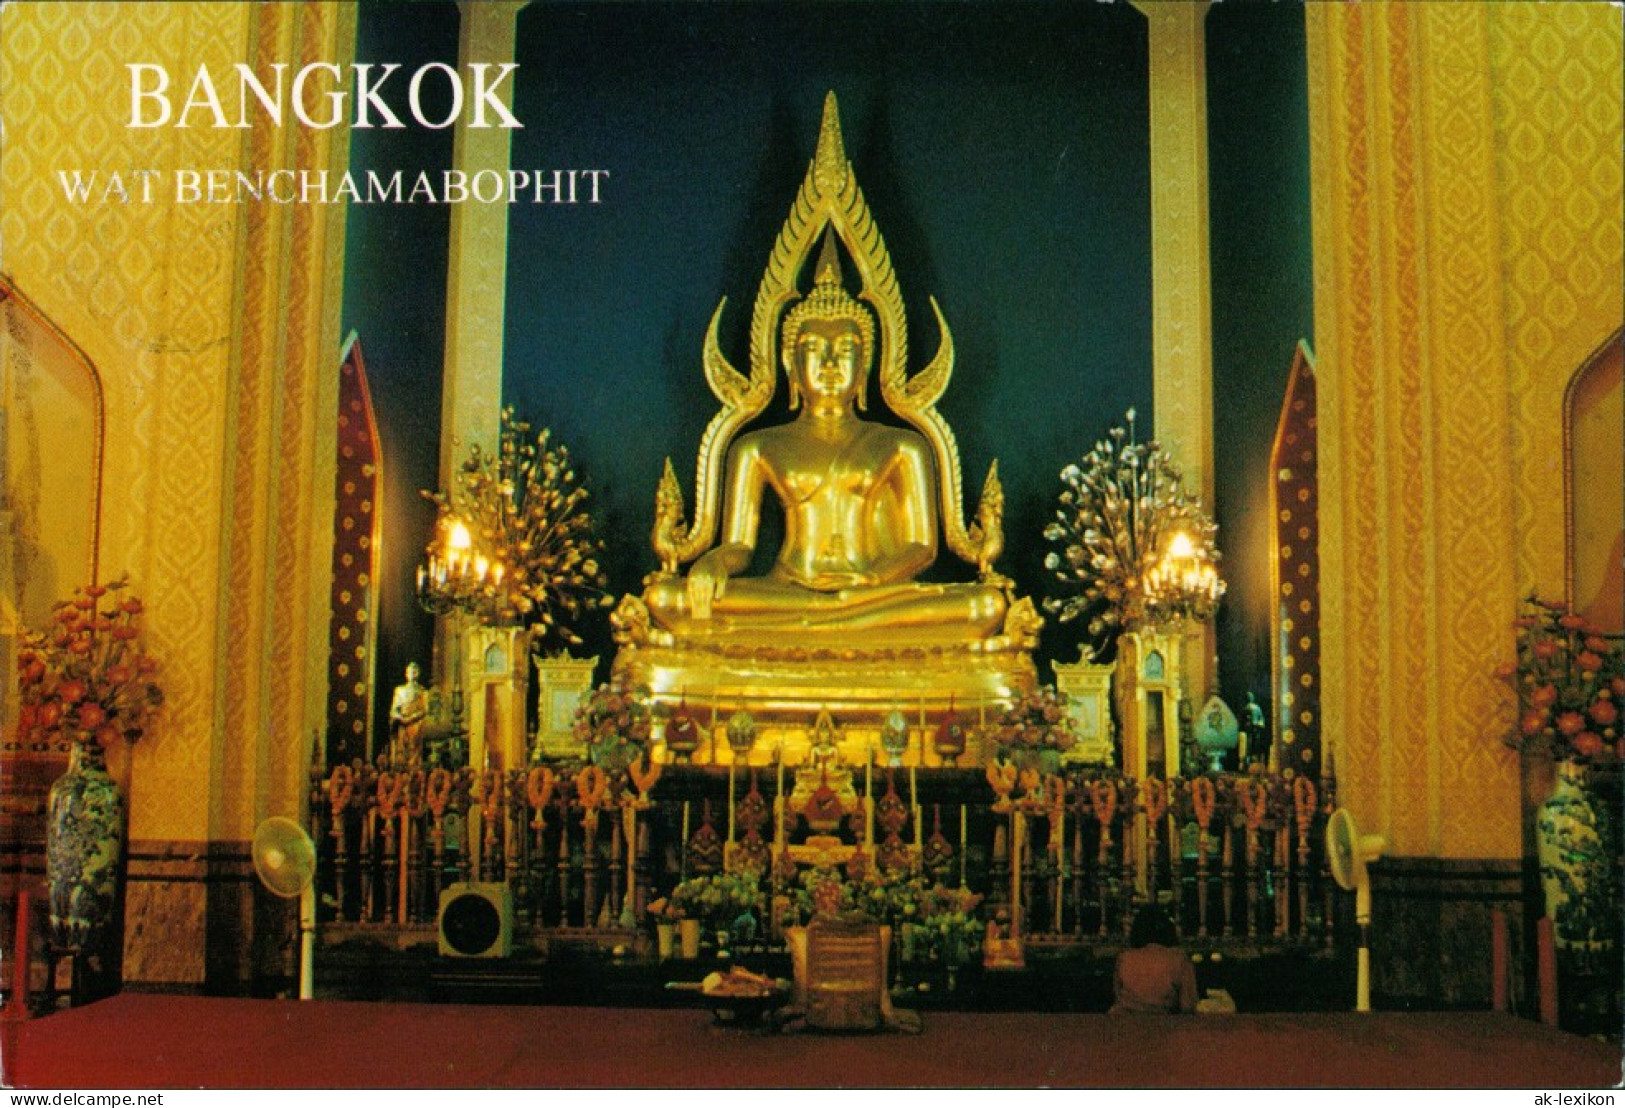 Postcard Bangkok Wat Benchamabophit (The Marble Temple) 2000 - Thailand